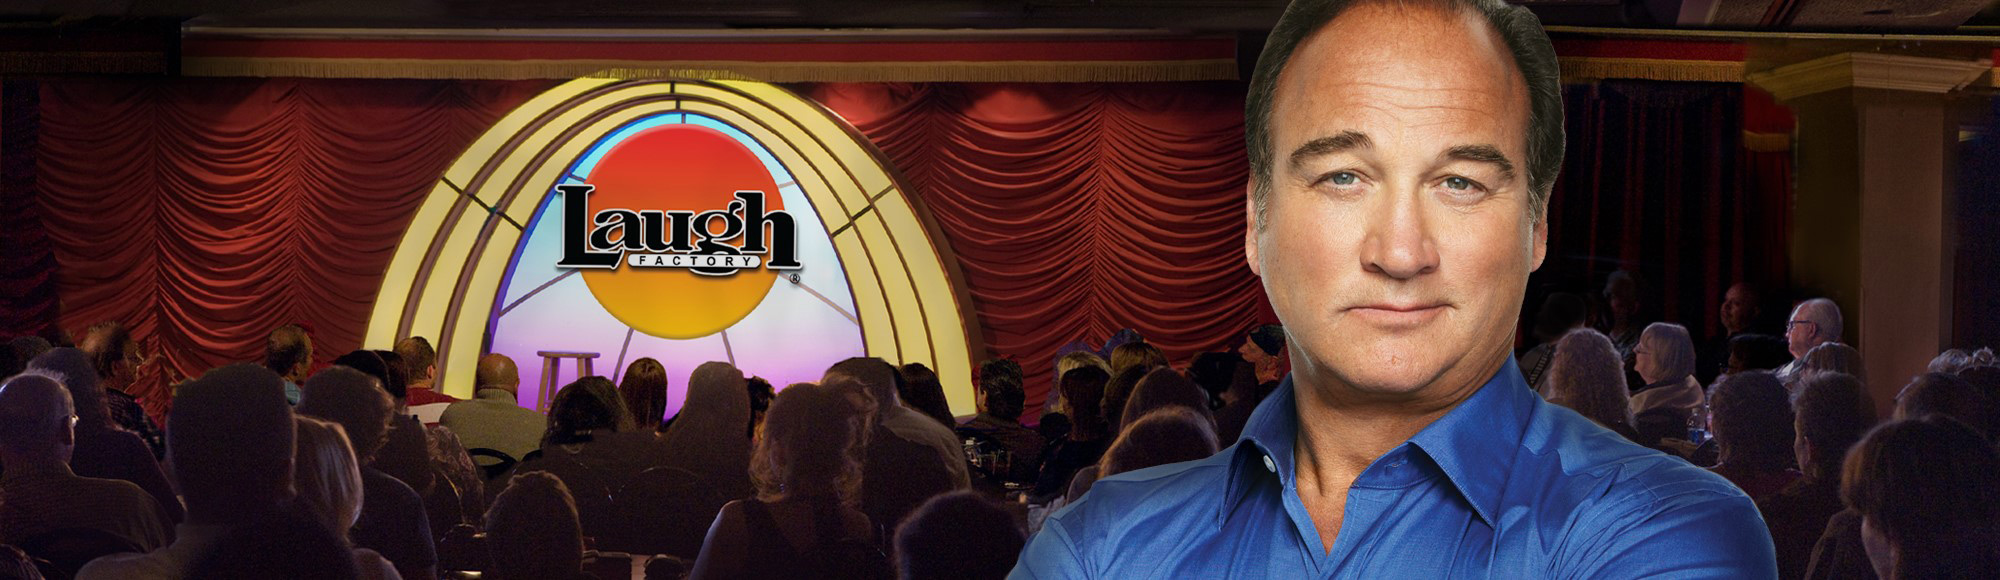 Jim Belushi & The Board of Comedy Show Las Vegas Tickets & Reviews